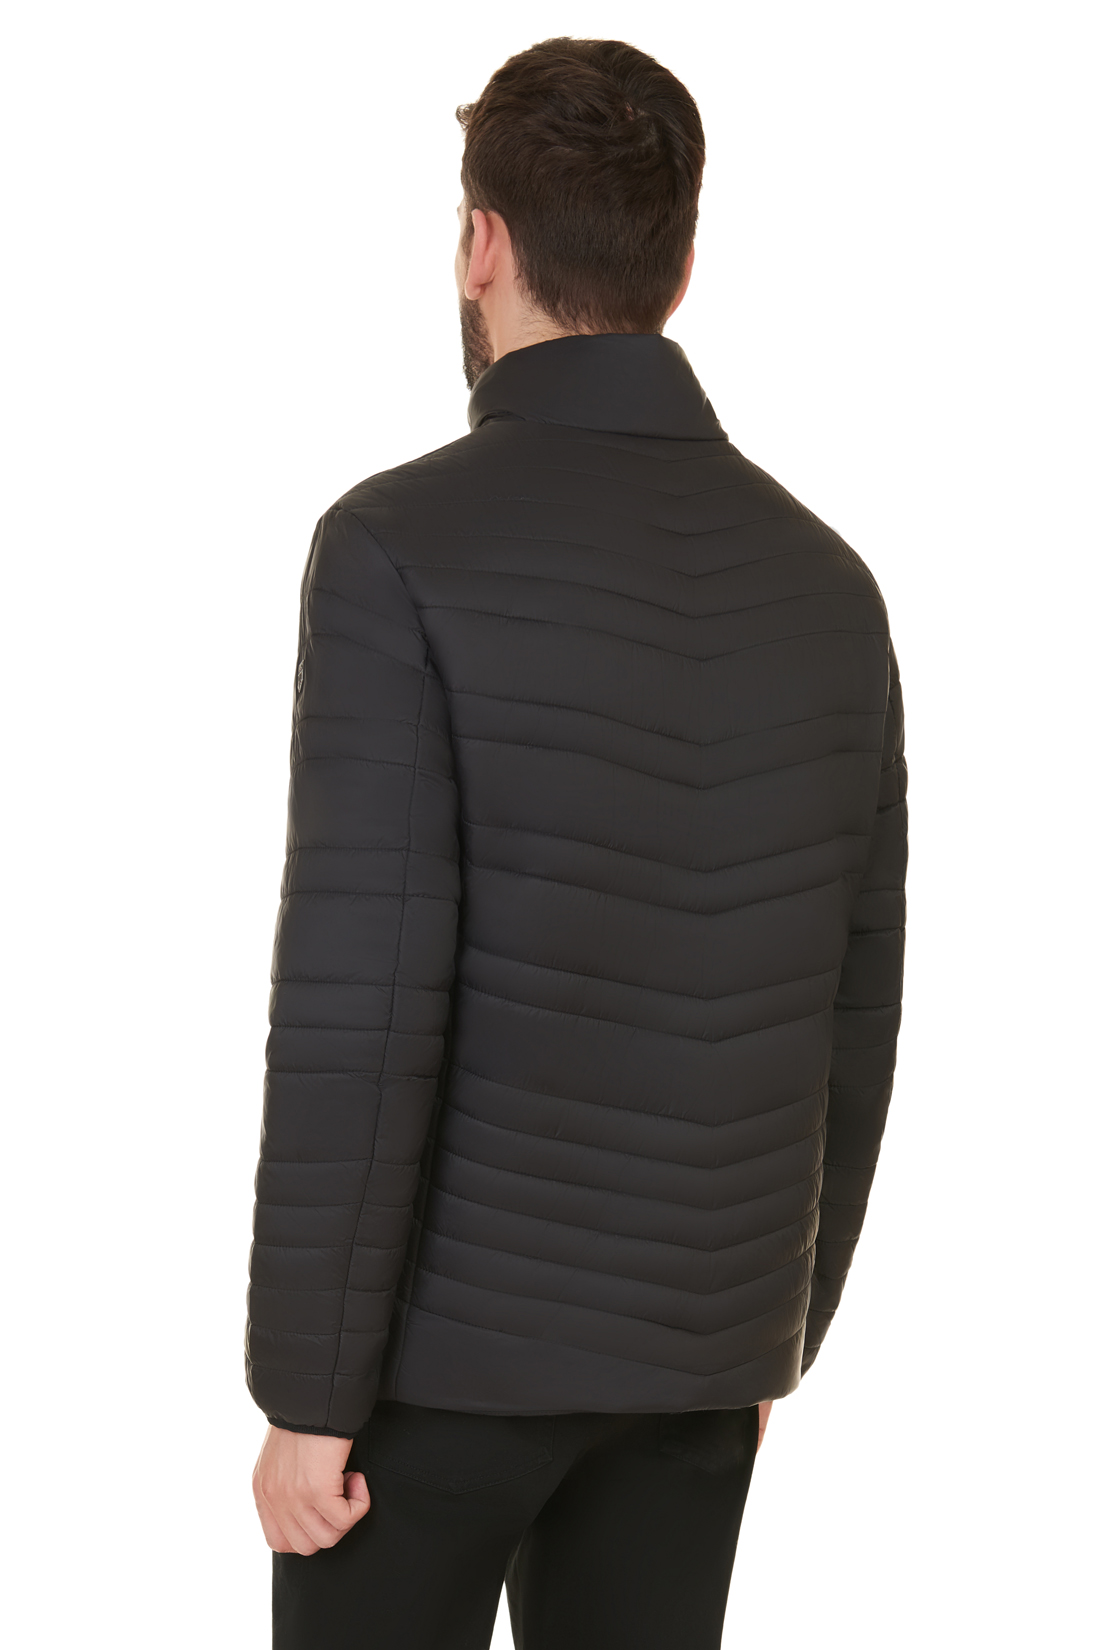 Куртка с наклонной простёжкой (арт. baon B537522), размер XXL, цвет черный Куртка с наклонной простёжкой (арт. baon B537522) - фото 2